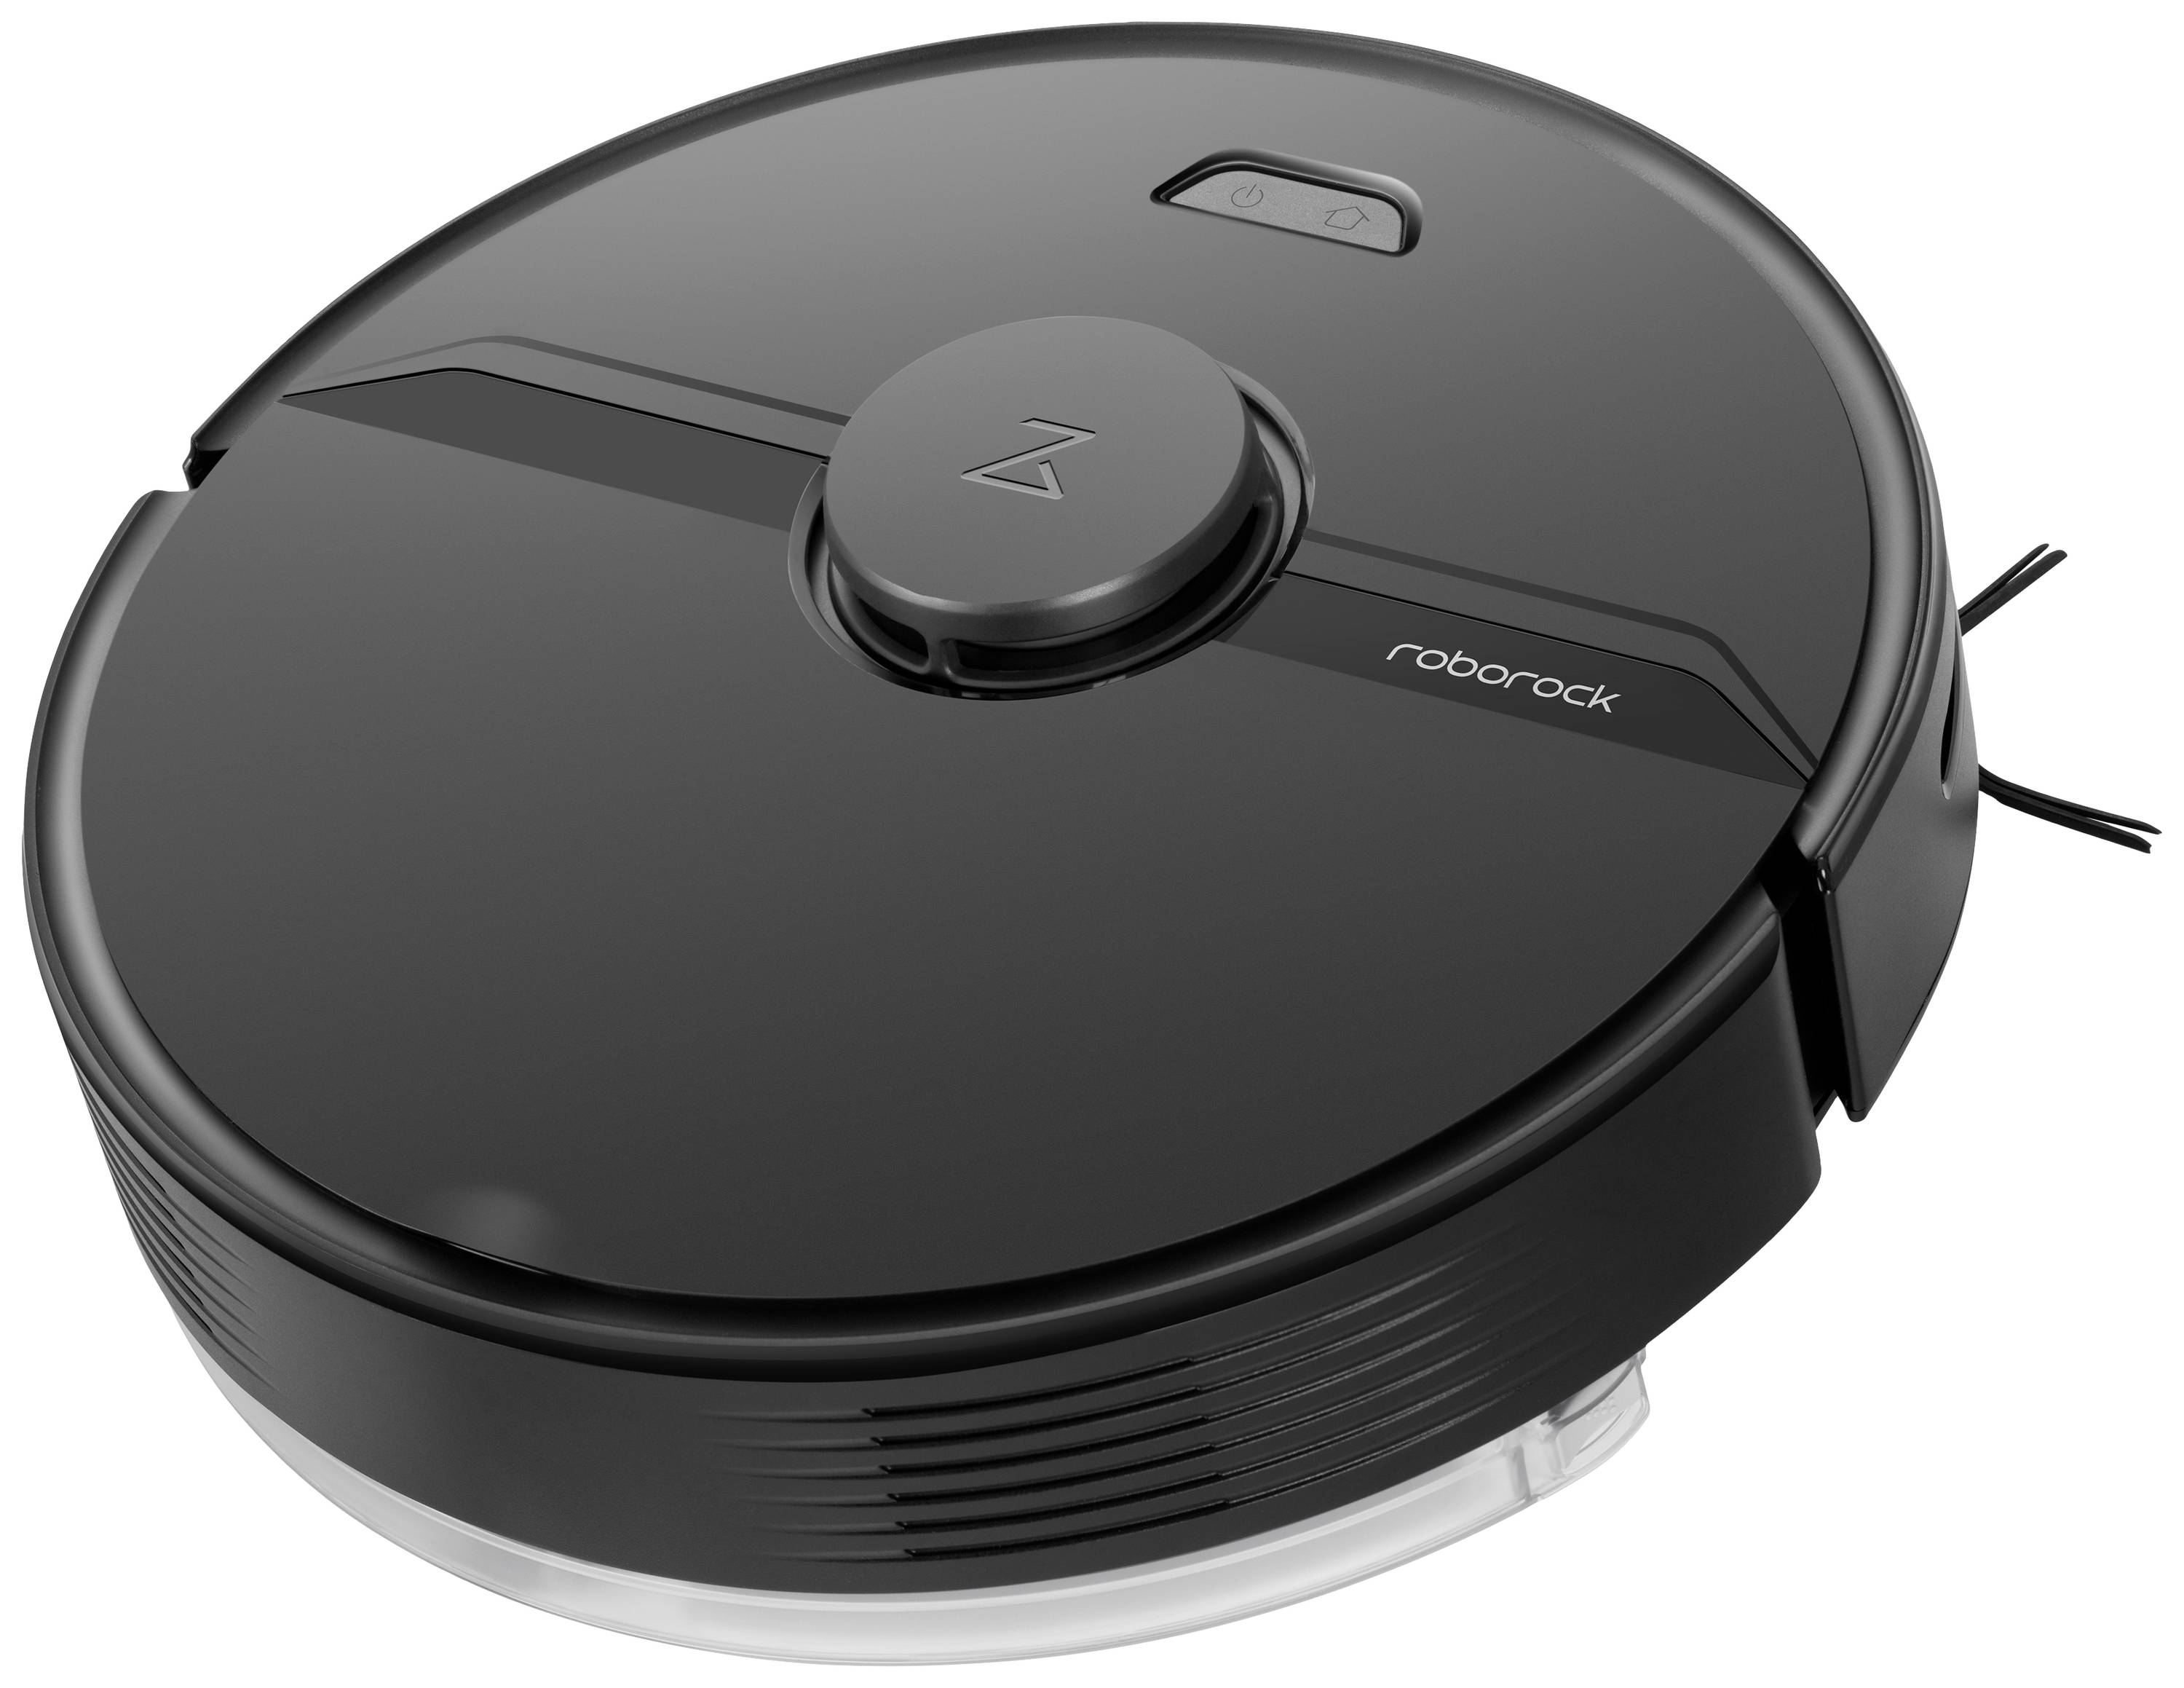 Roborock Q7 vac/sweeper Black Alexa compatibility, Home compatibility, Voice-controlled, | Conrad.com